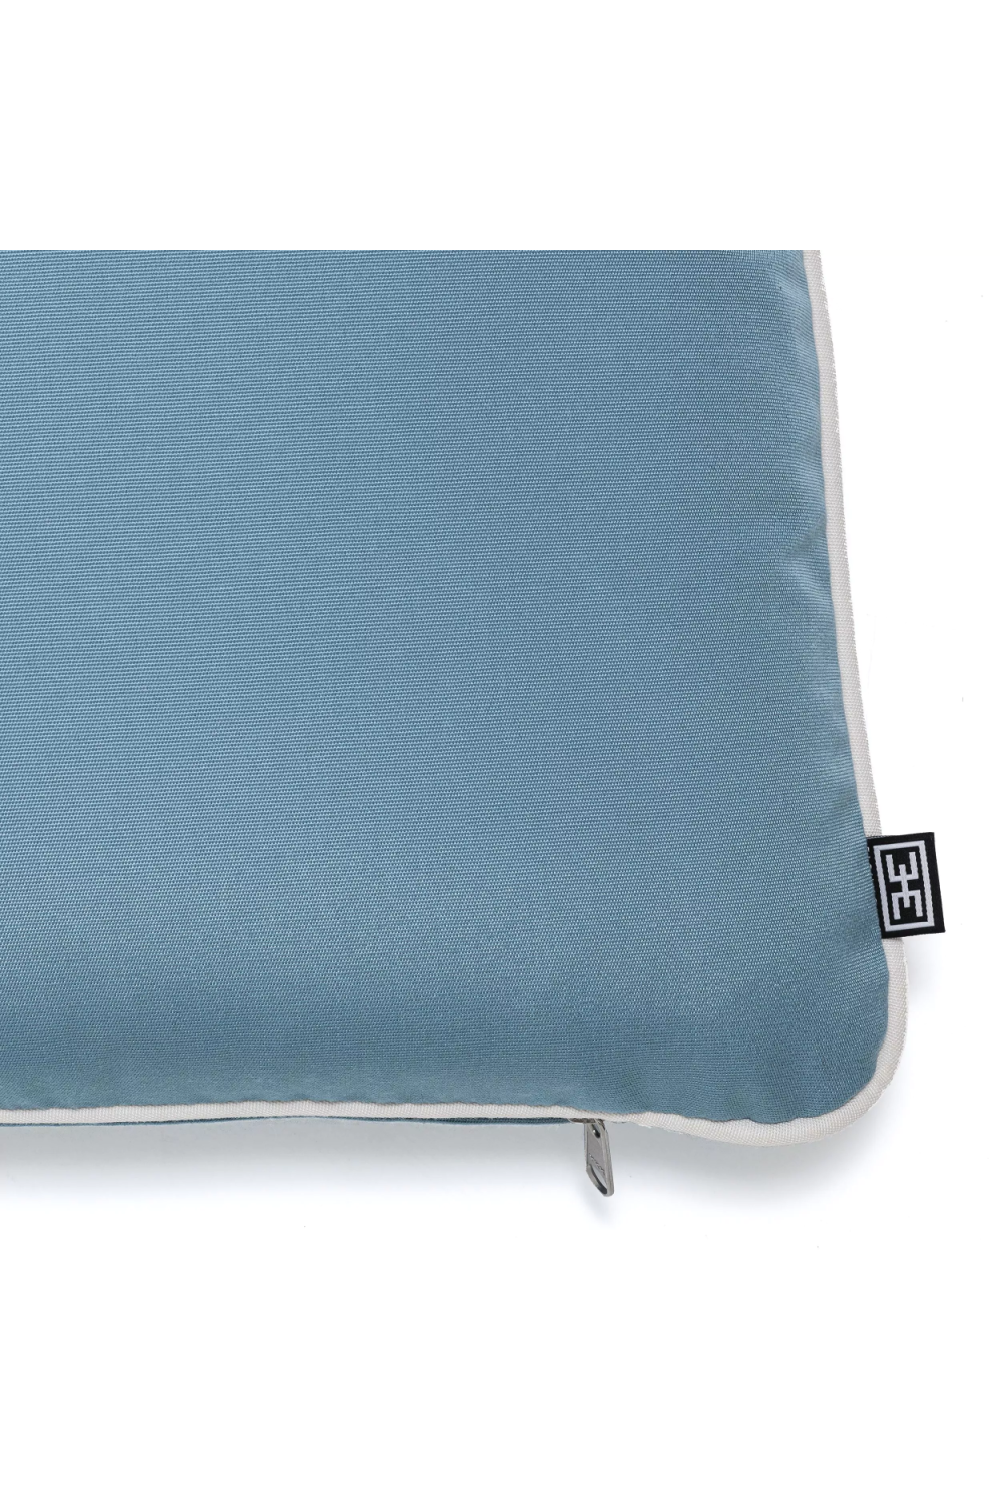 Minimalist Outdoor Cushion | Eichholtz Universal | Oroa.com